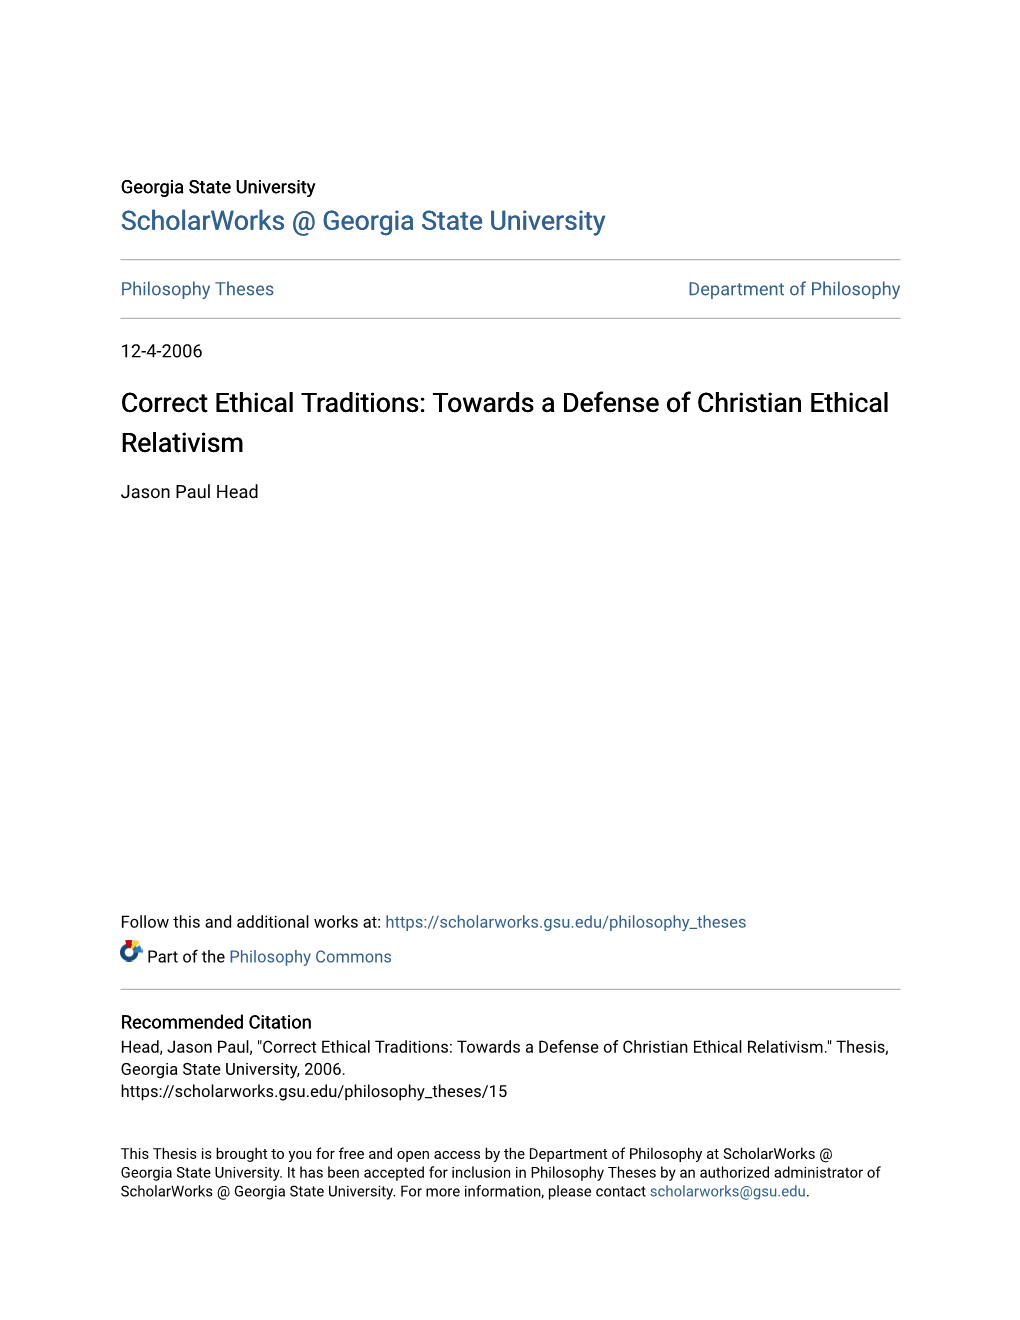 Towards a Defense of Christian Ethical Relativism